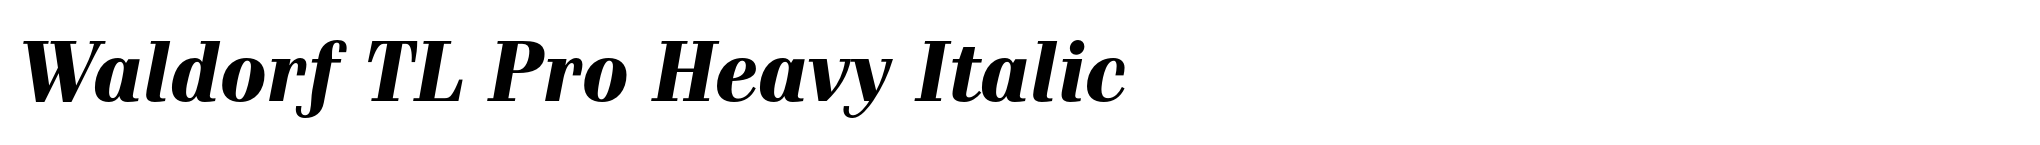 Waldorf TL Pro Heavy Italic image